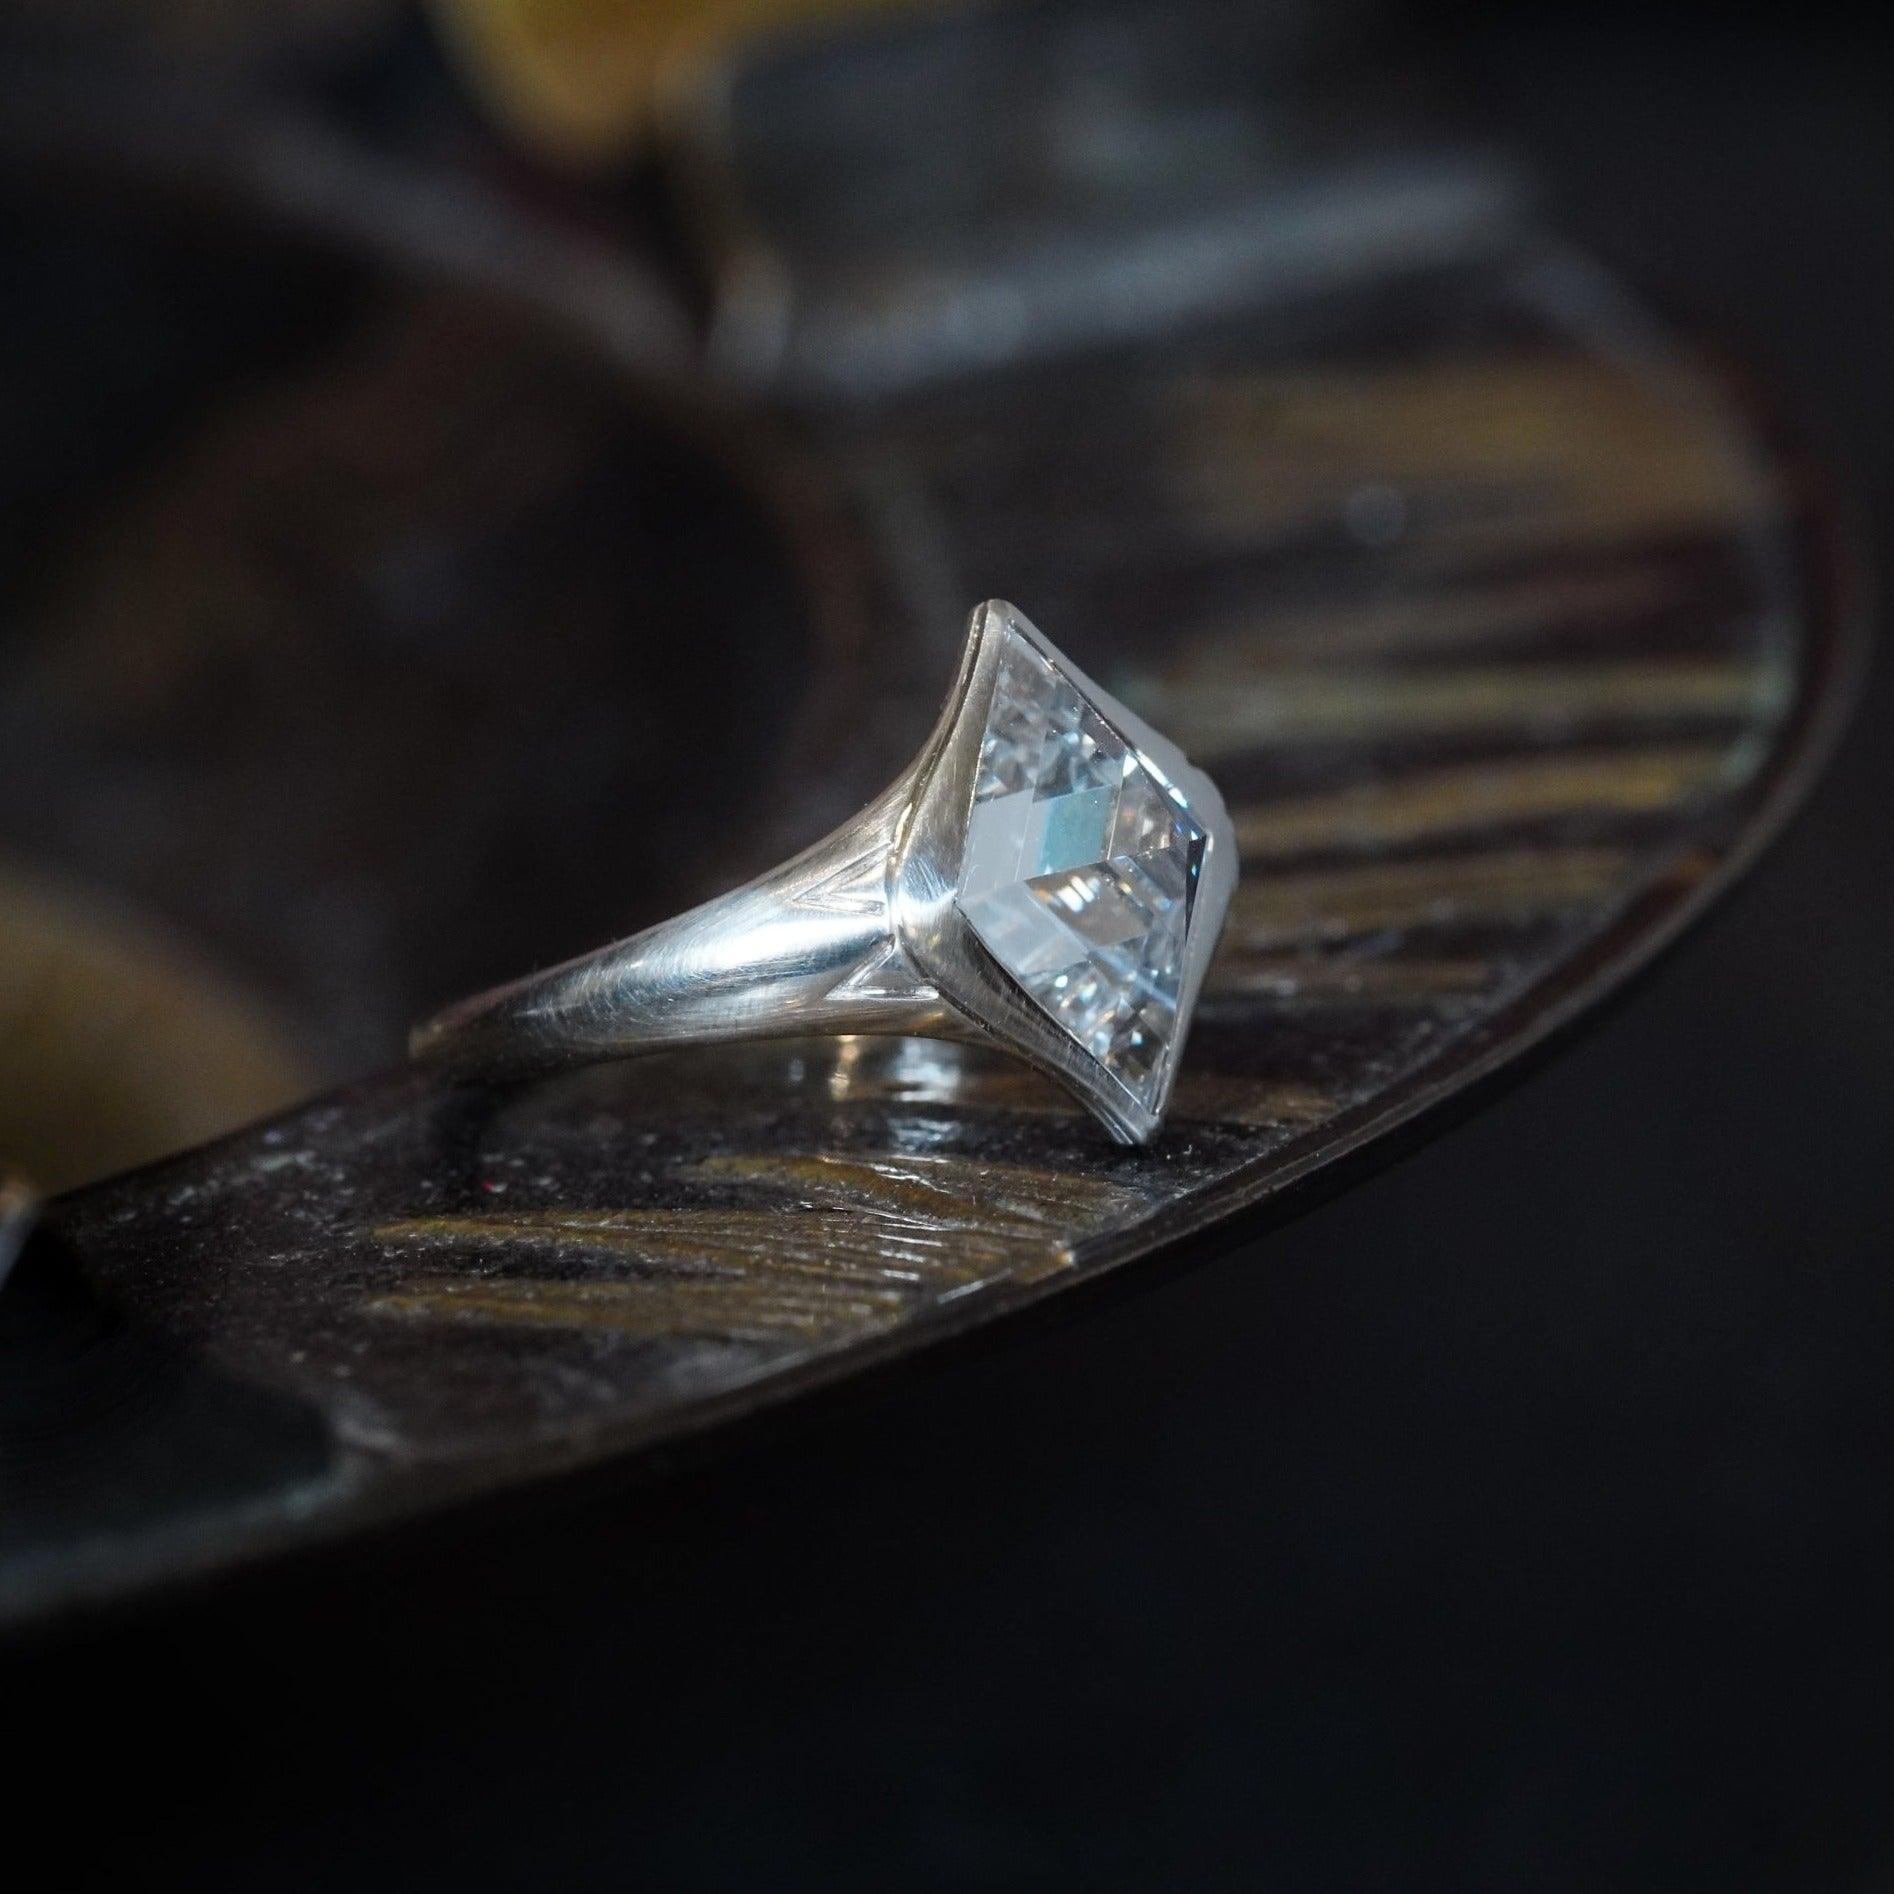 Lozenge step cut diamond: 2.12 carat diamond radiating elegance and beauty